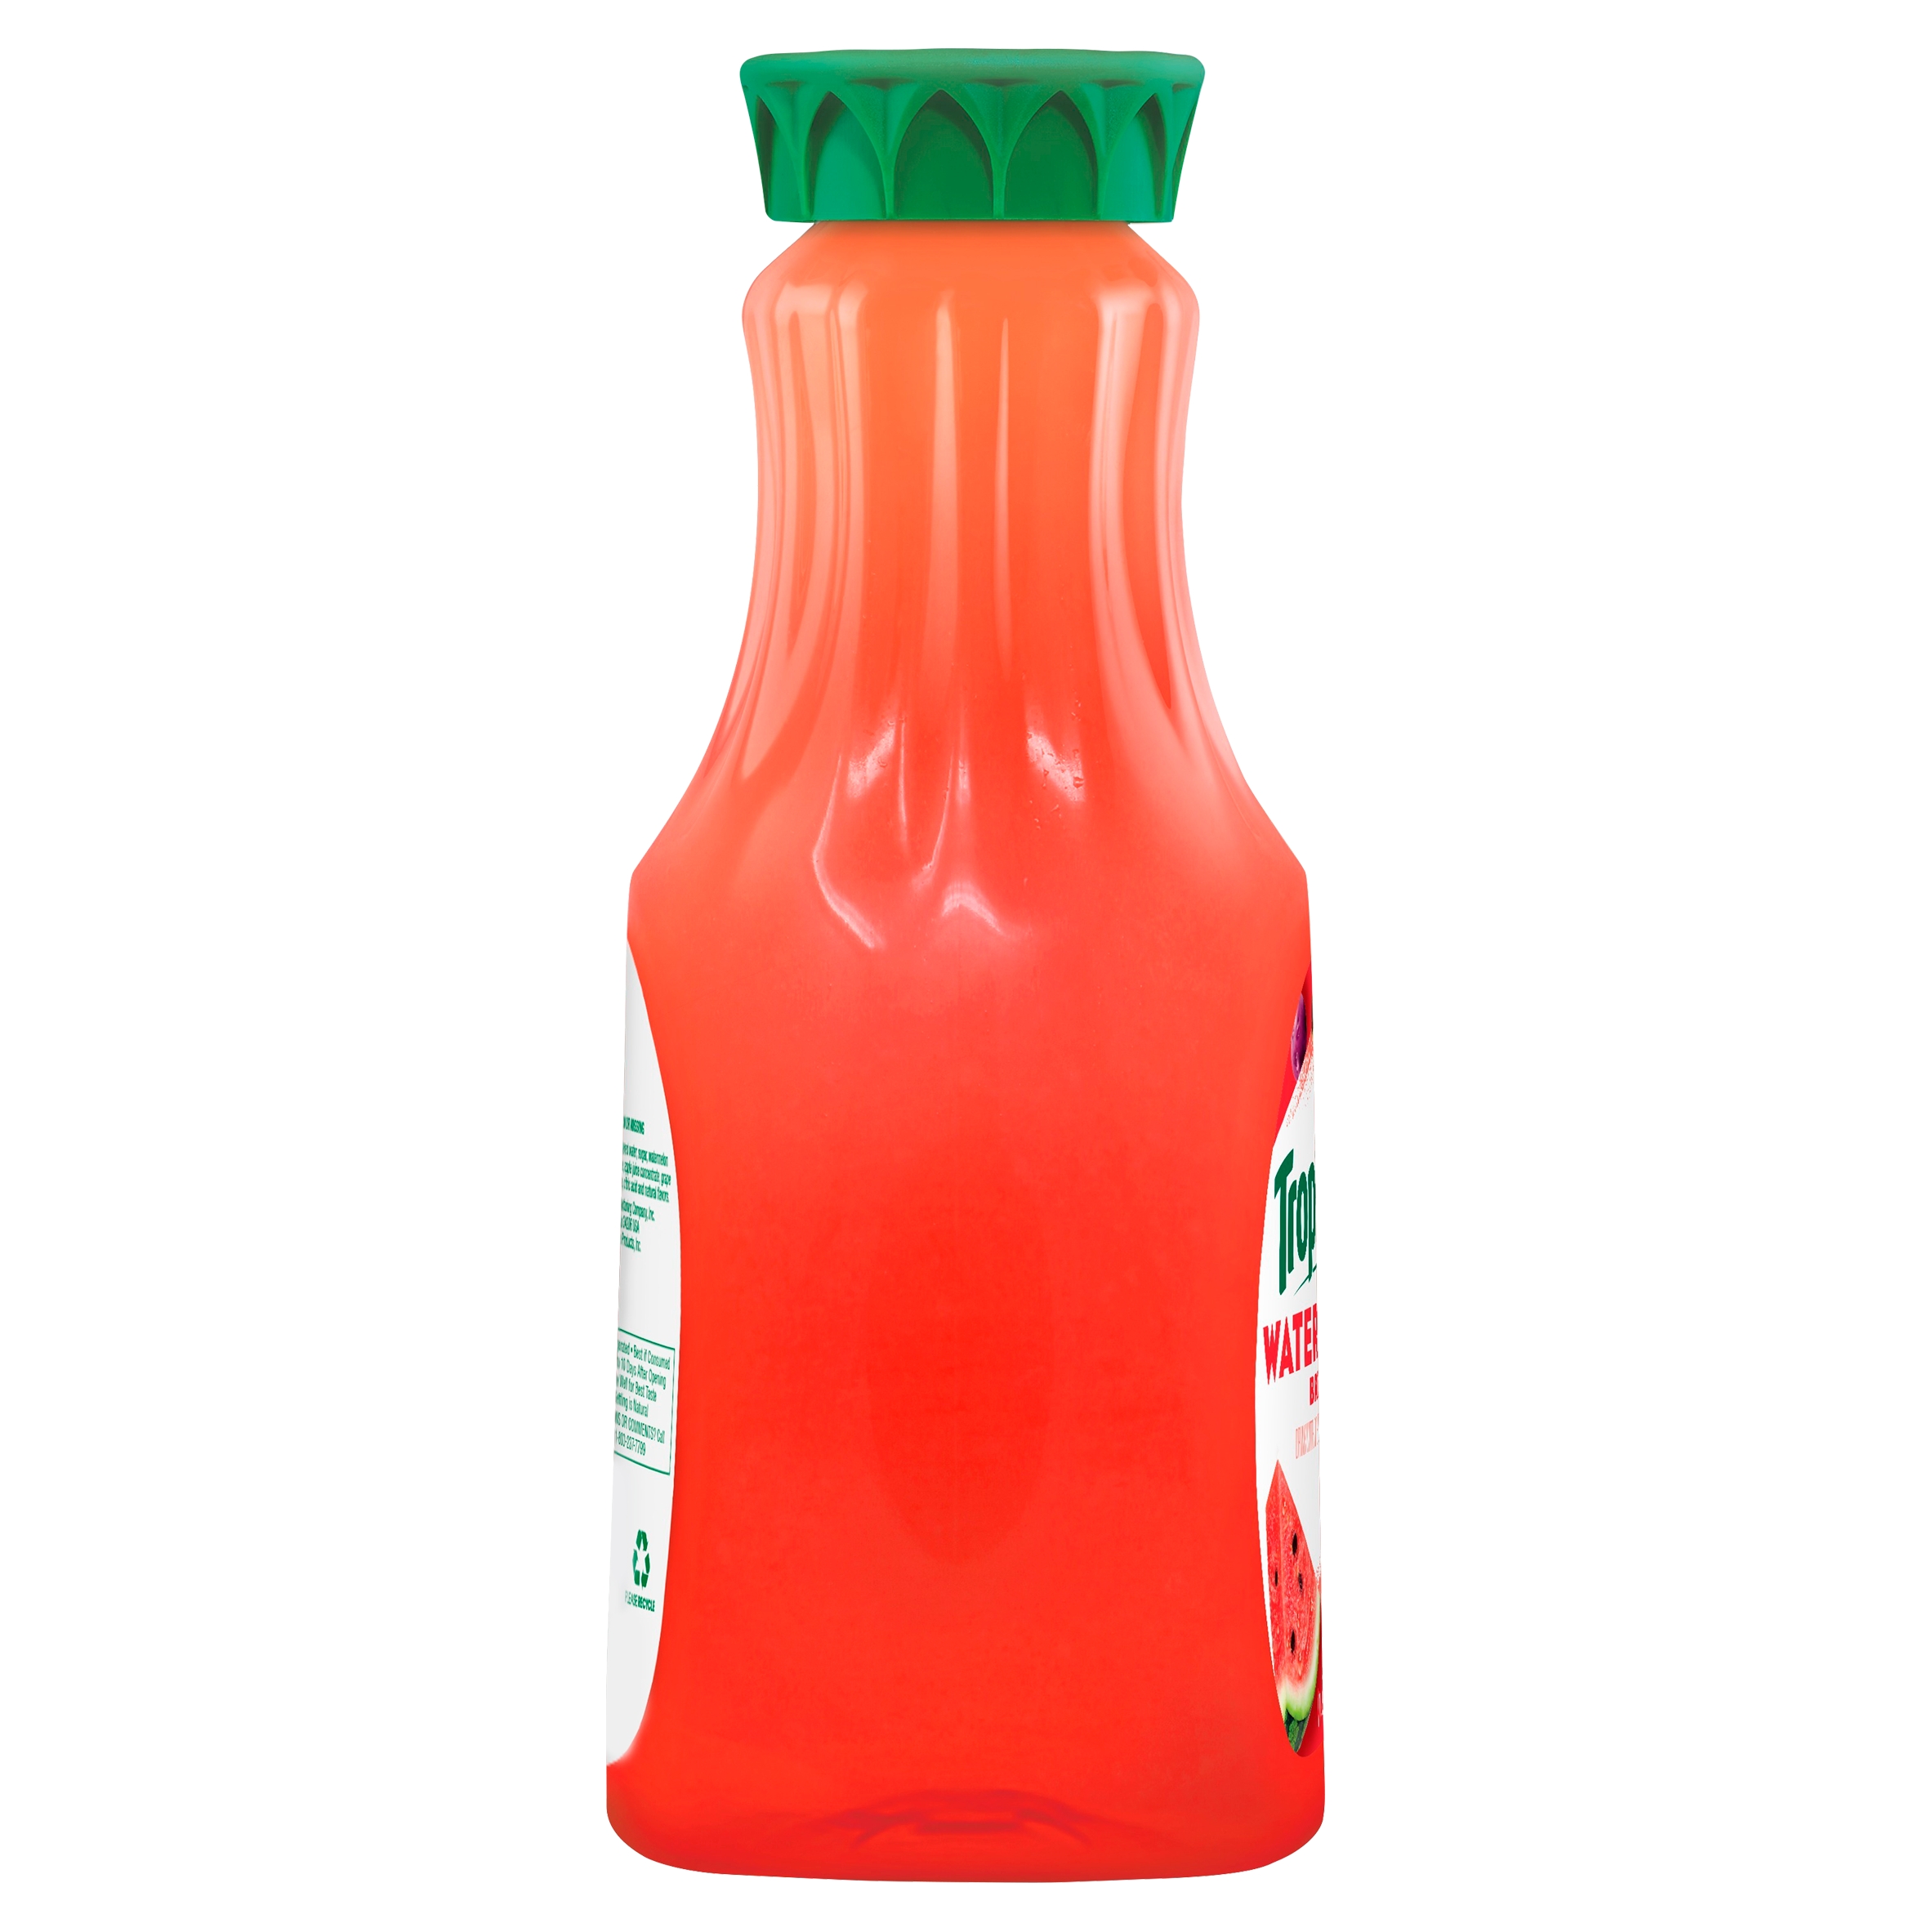 Tropicana Watermelon Breeze Juice Drink, 52 oz Bottle - image 5 of 8